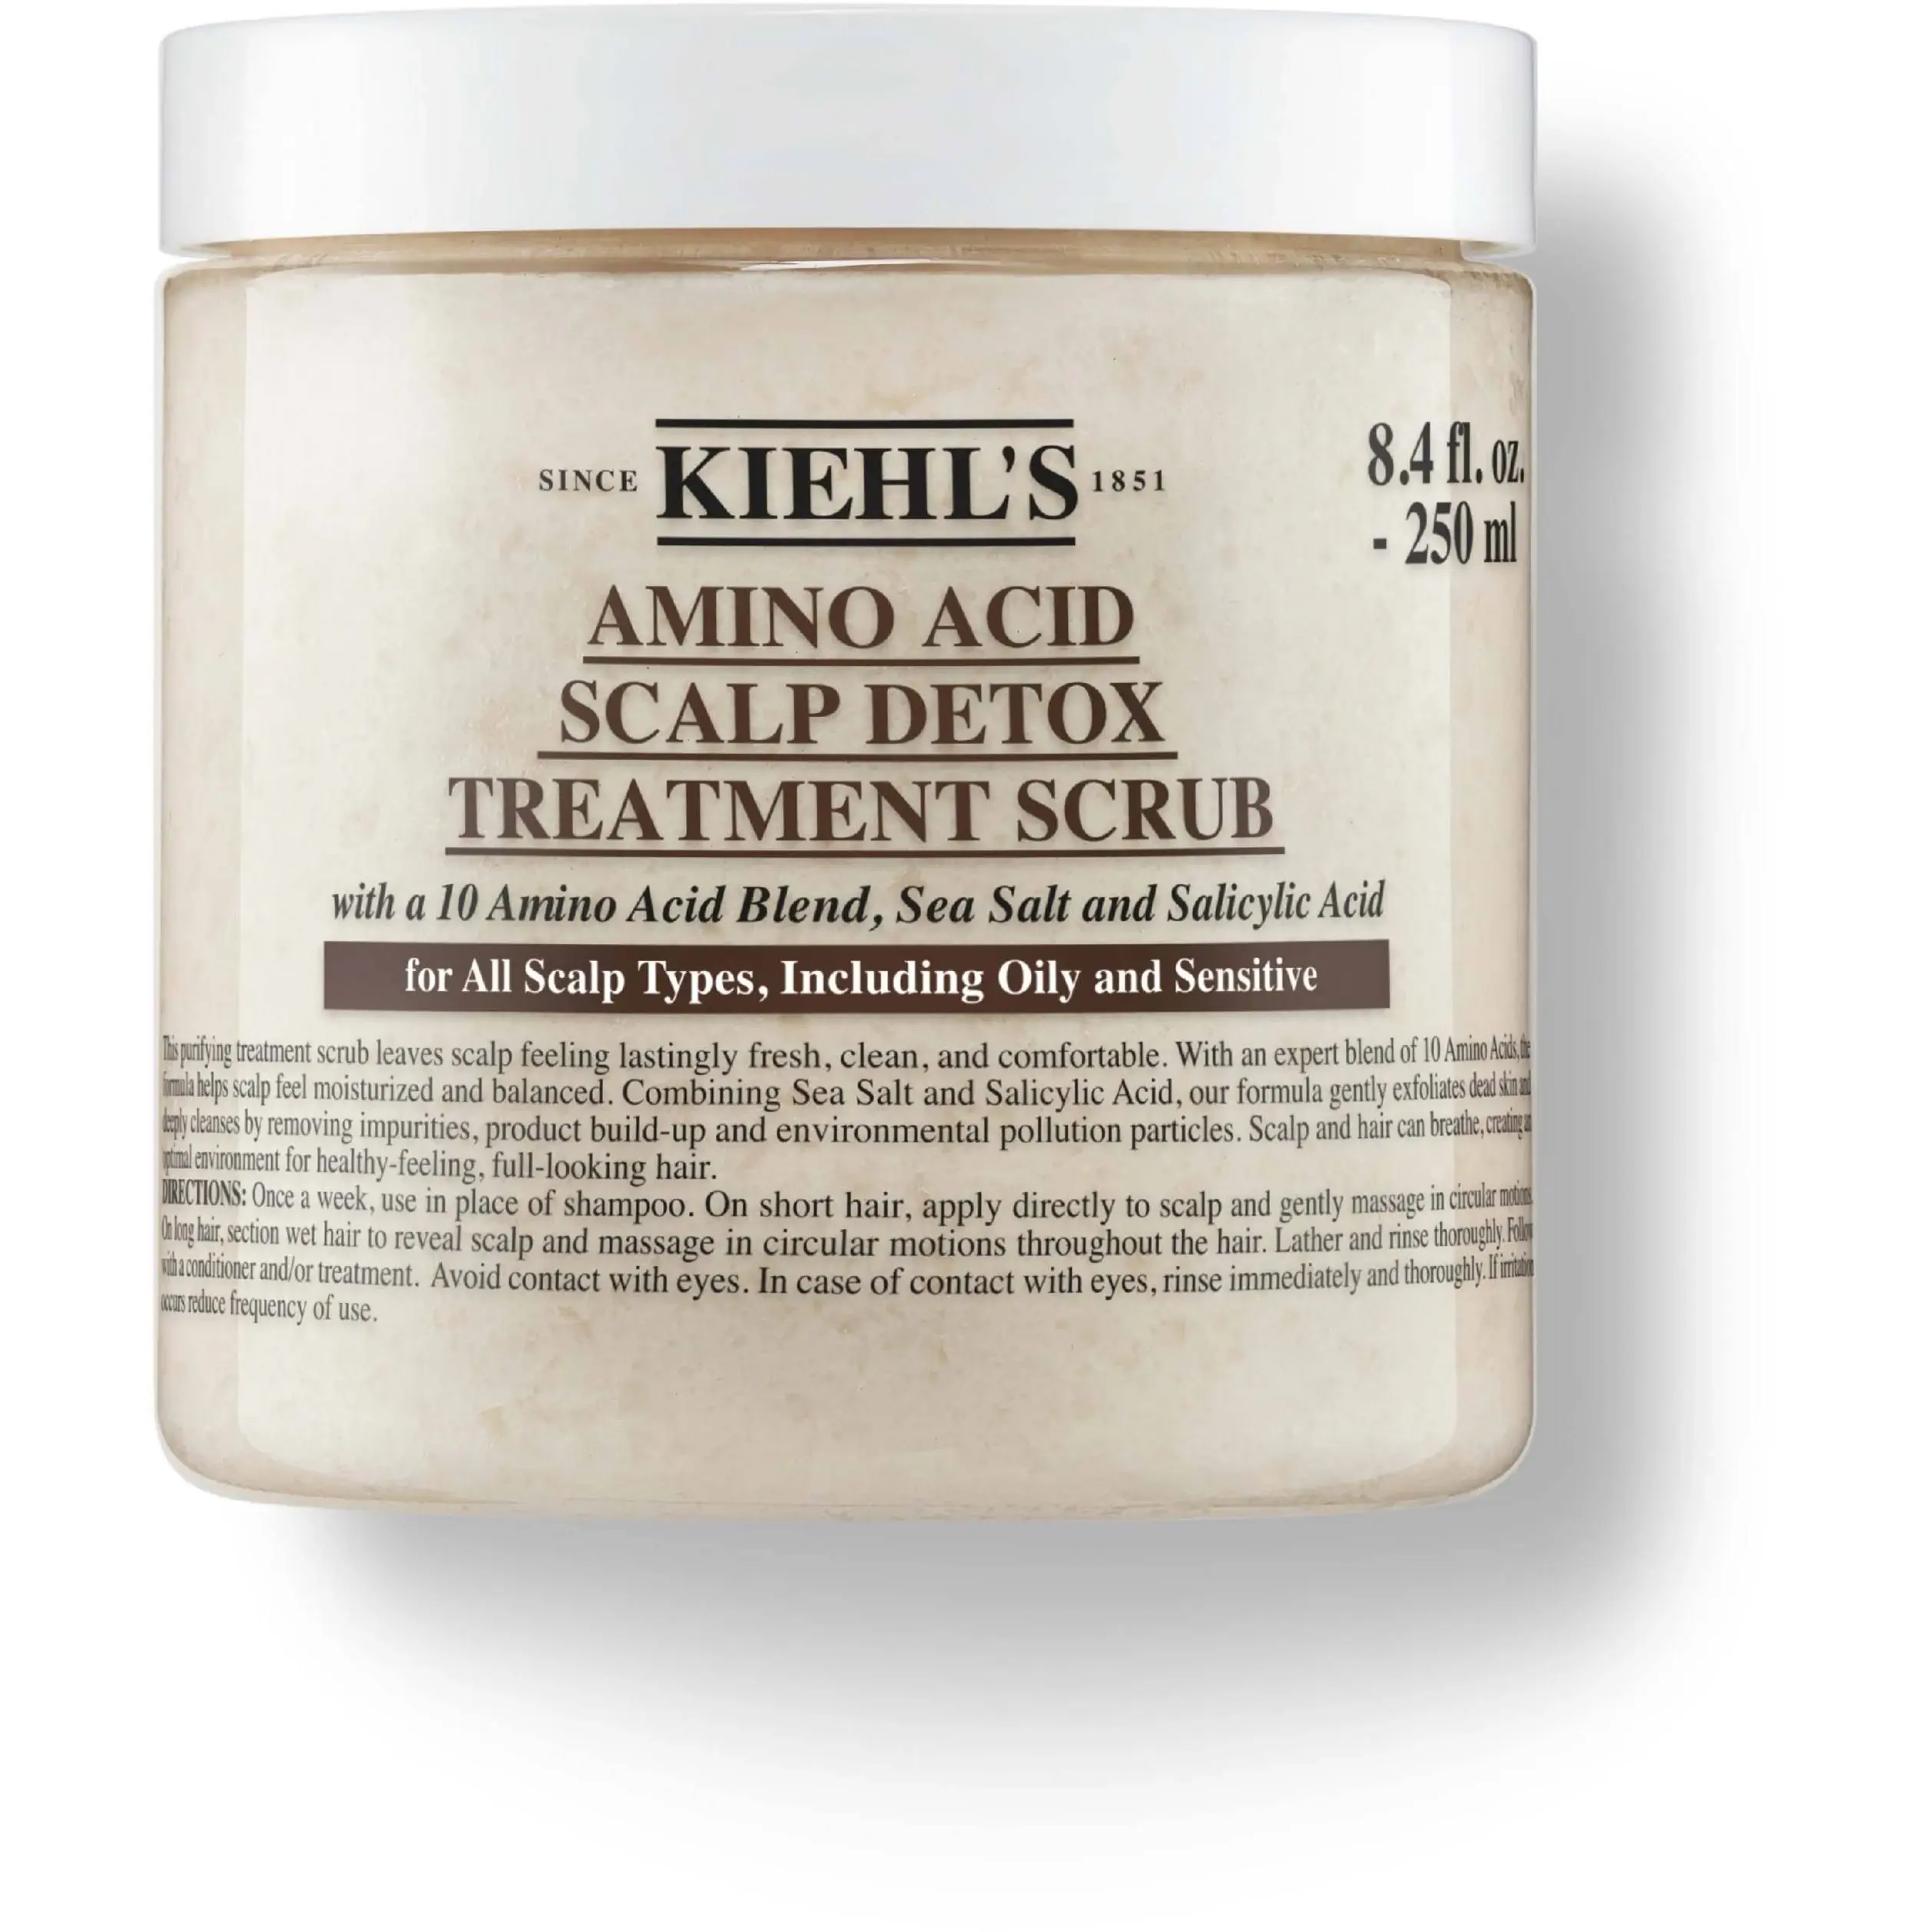 Kiehl's Amino Acid Scalp Detox Treatment Scrub (250 ml)